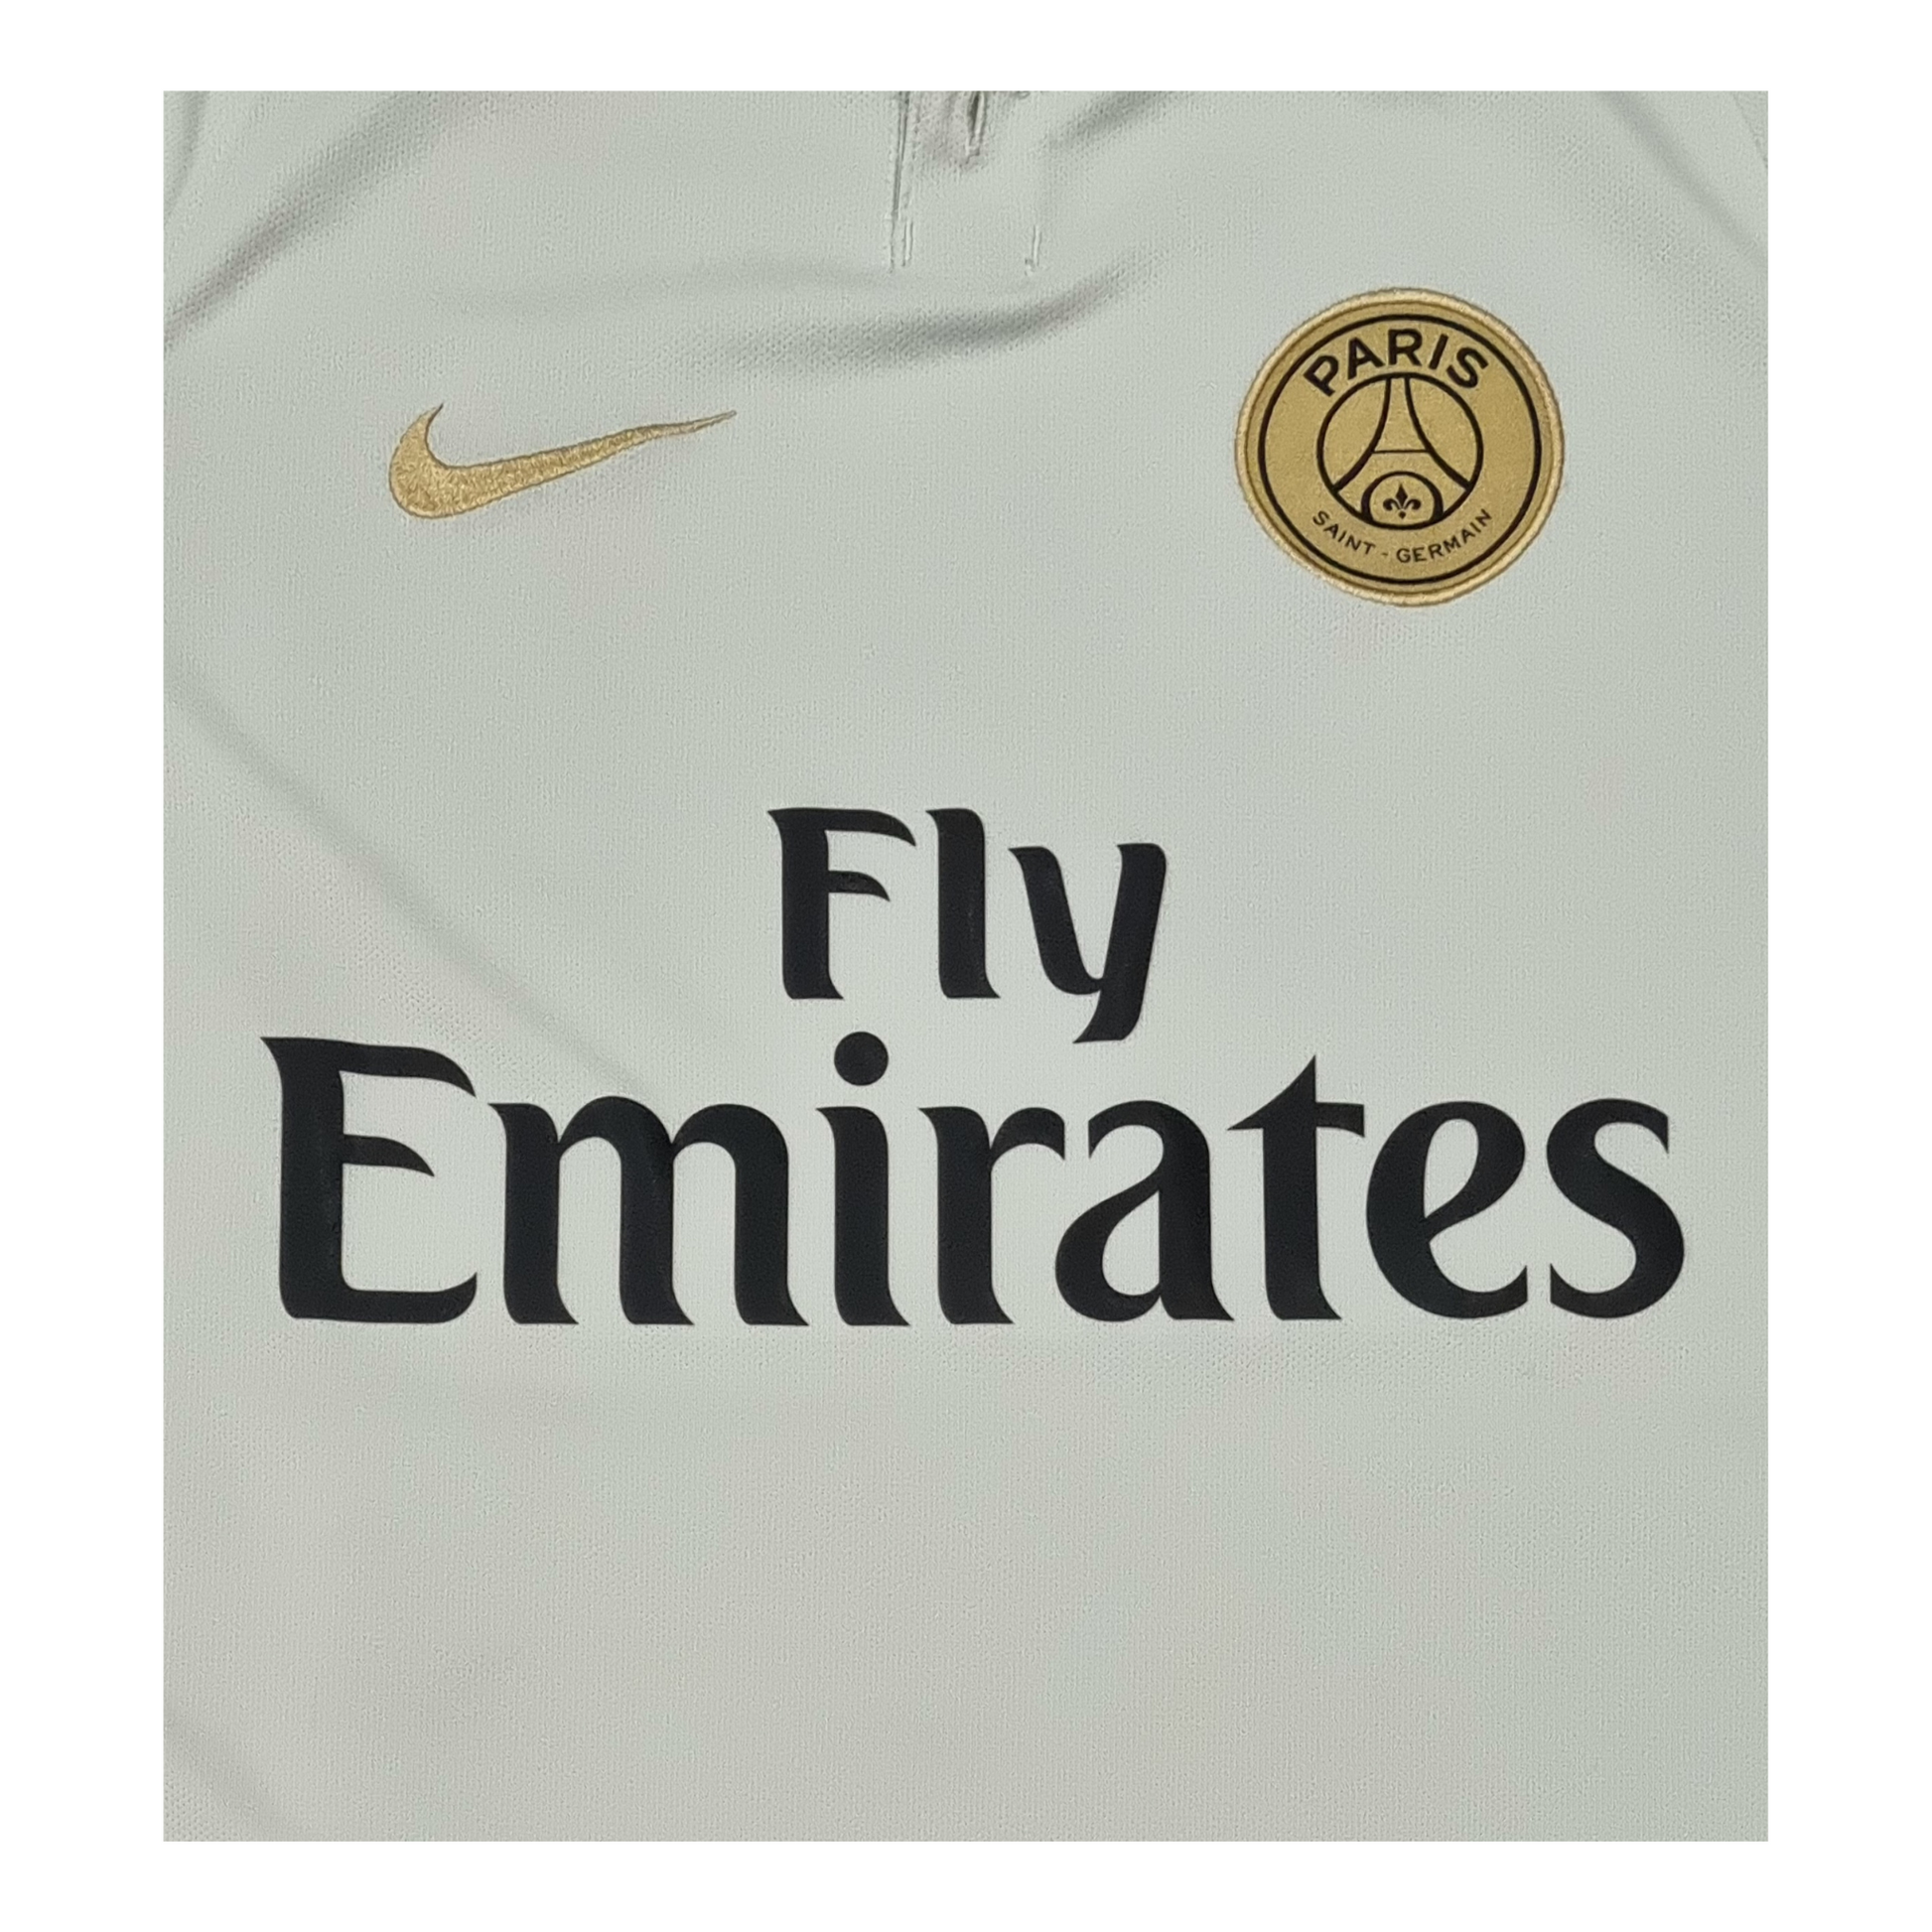 The Paris Saint-Germain 2018/19 Away Jersey, manufactured by Nike.